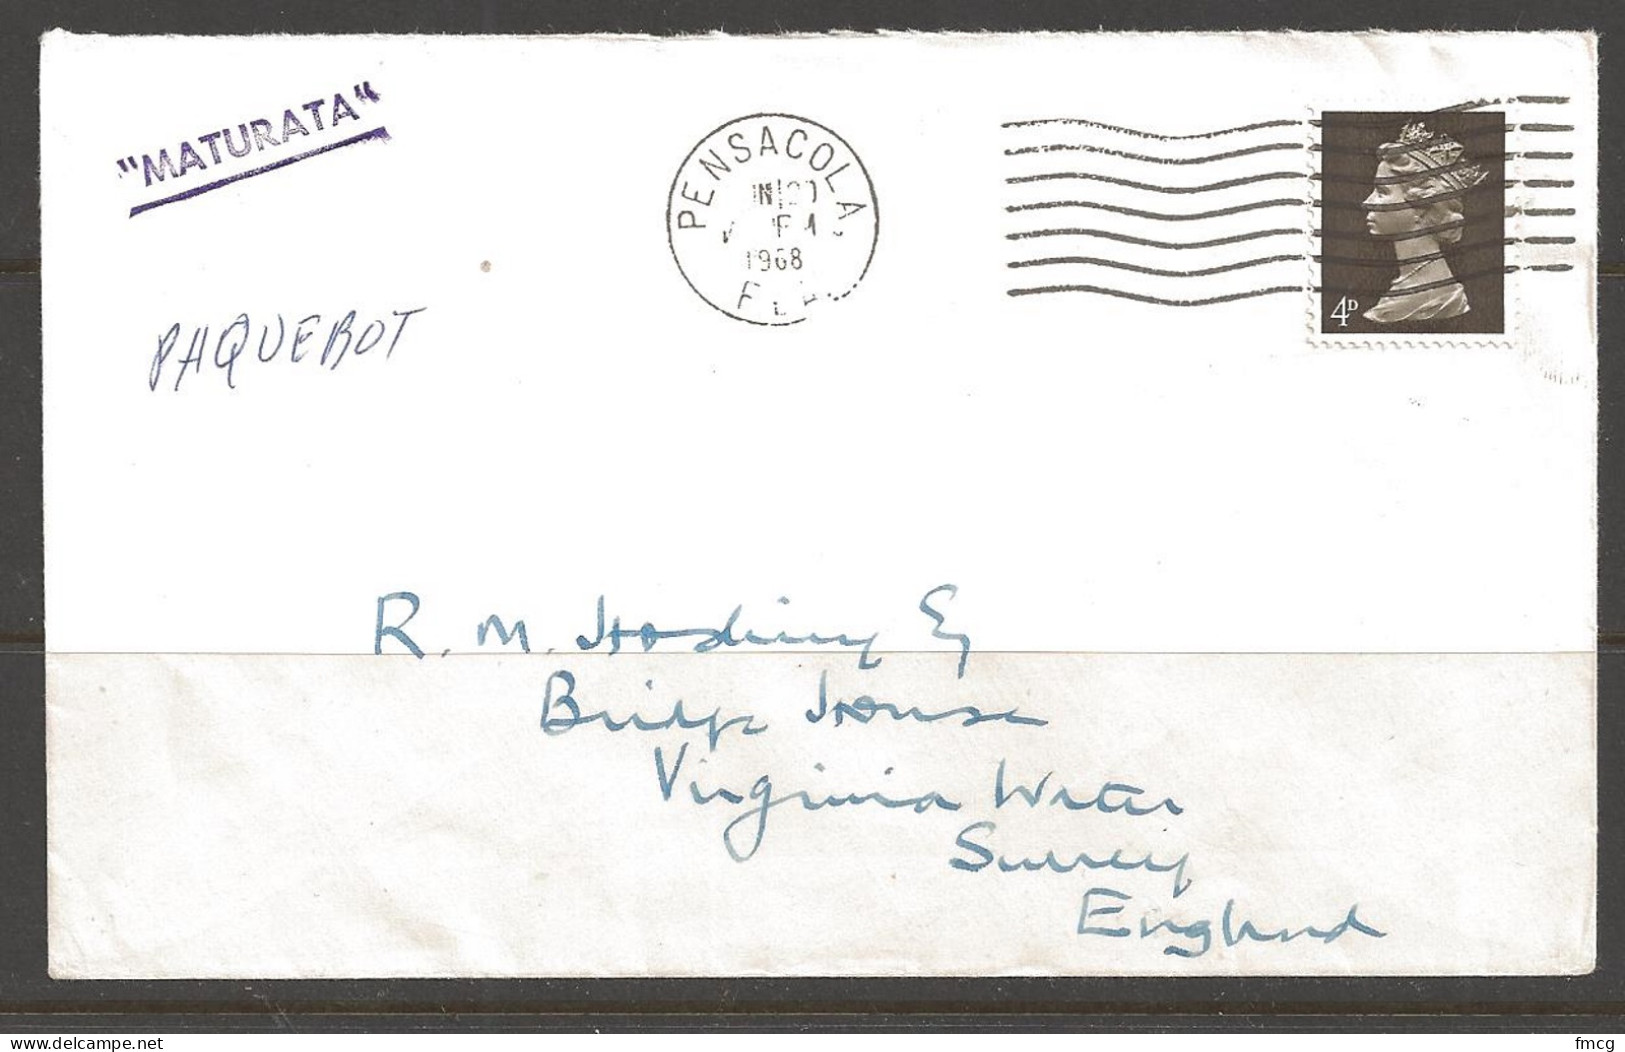 1968 Paquebot Cover, British Stamp Used In Pensacola, Florida - Brieven En Documenten